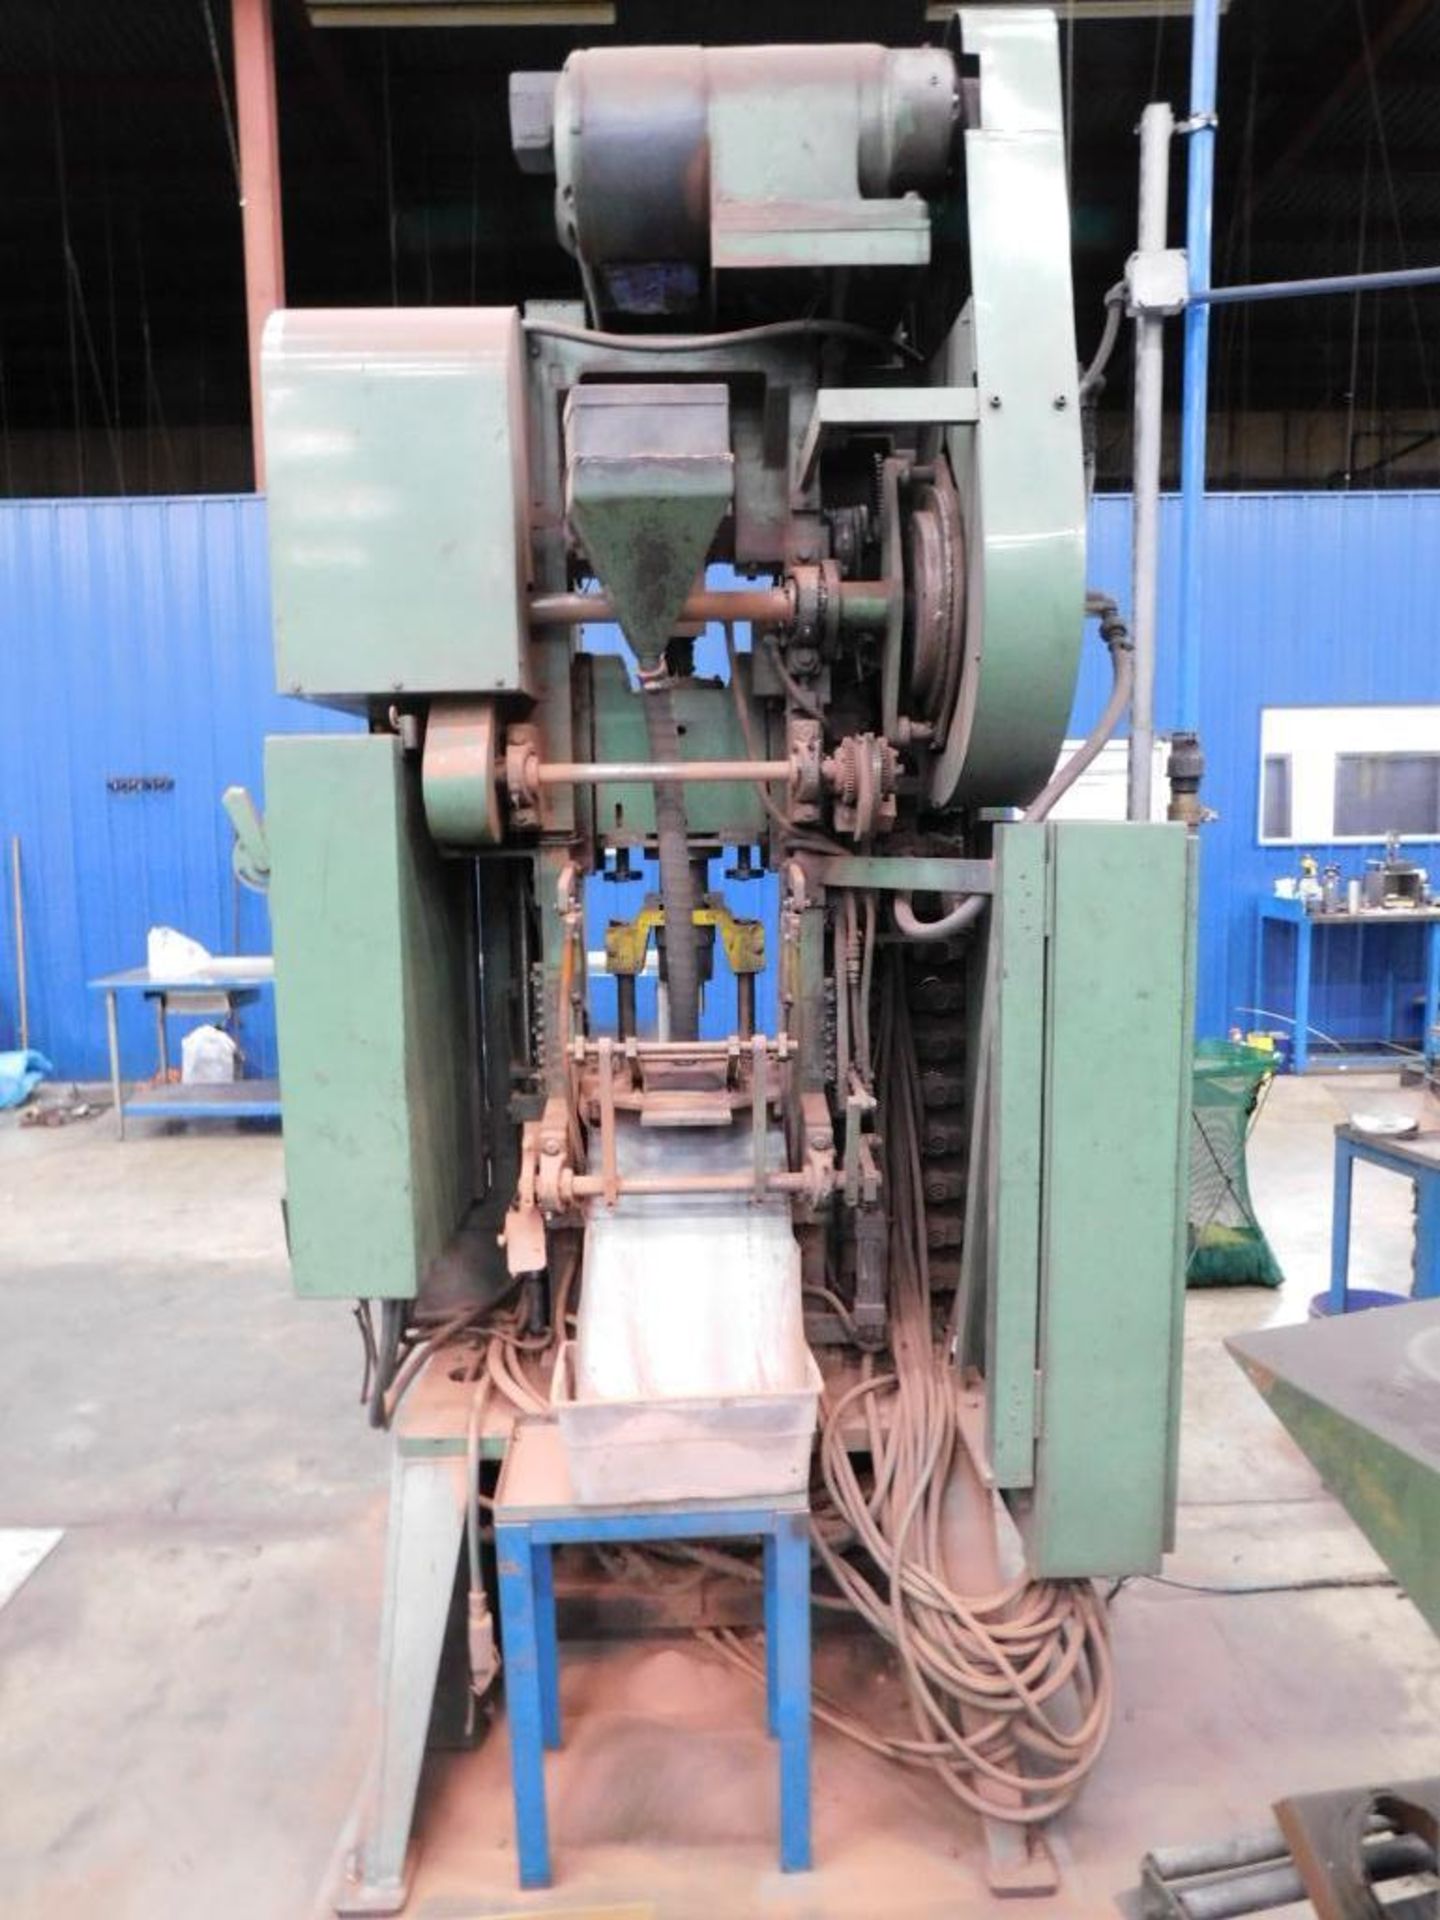 Gasbarre Powder Compacting Press, Mechanical, Model 30 Standard, S/N: 86256, 30 Ton Maximum Pressing - Image 4 of 22